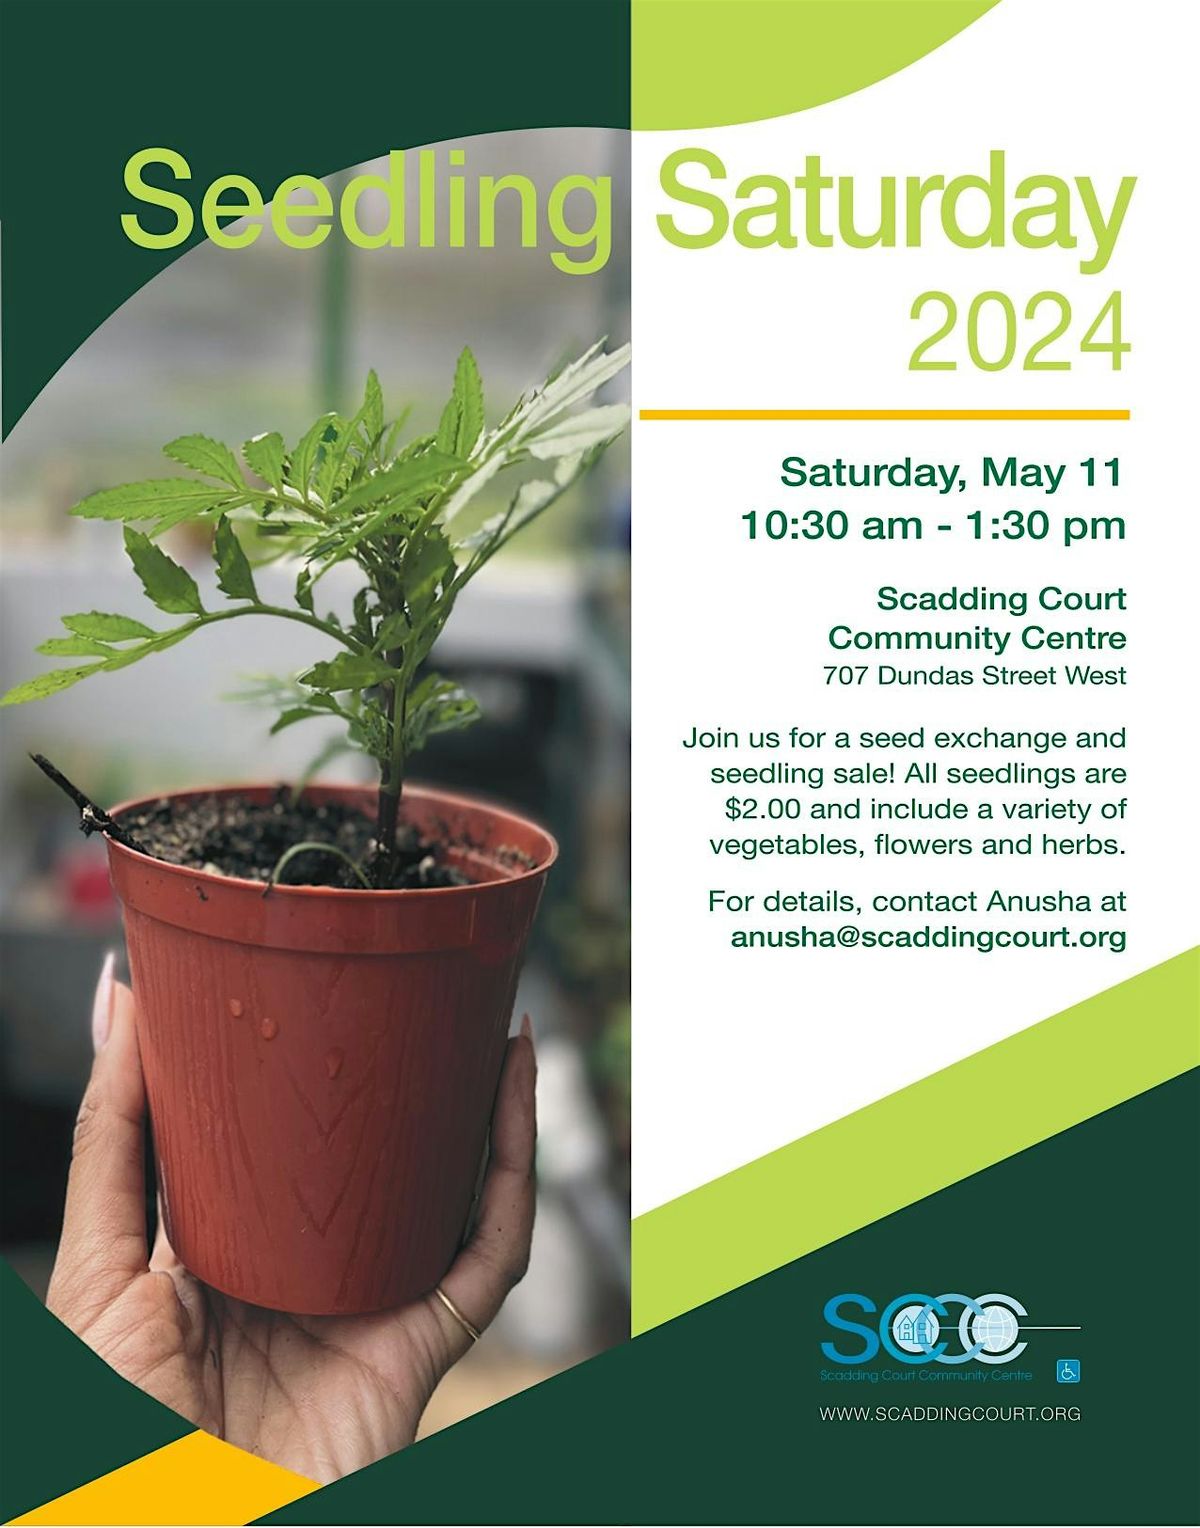 Scadding Court Seedling Saturday